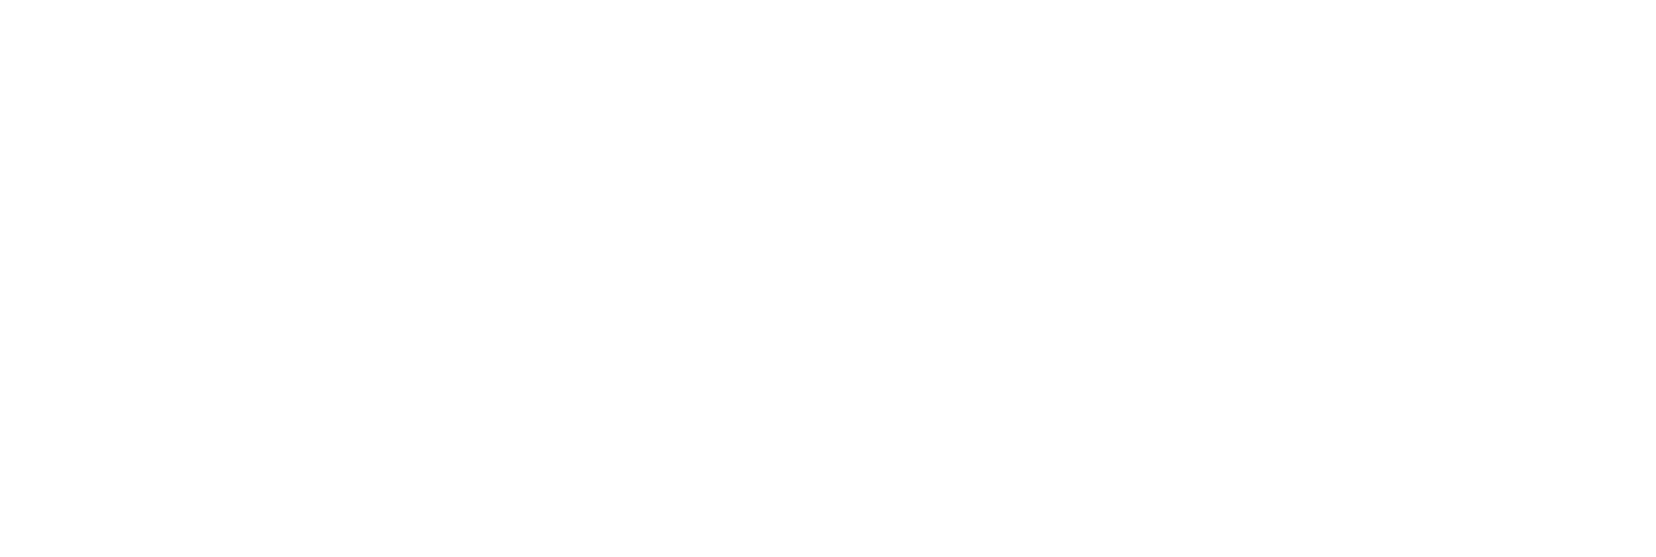 TOKYO STARTUP GATEWAY 2017 コンテスト部門 結果発表